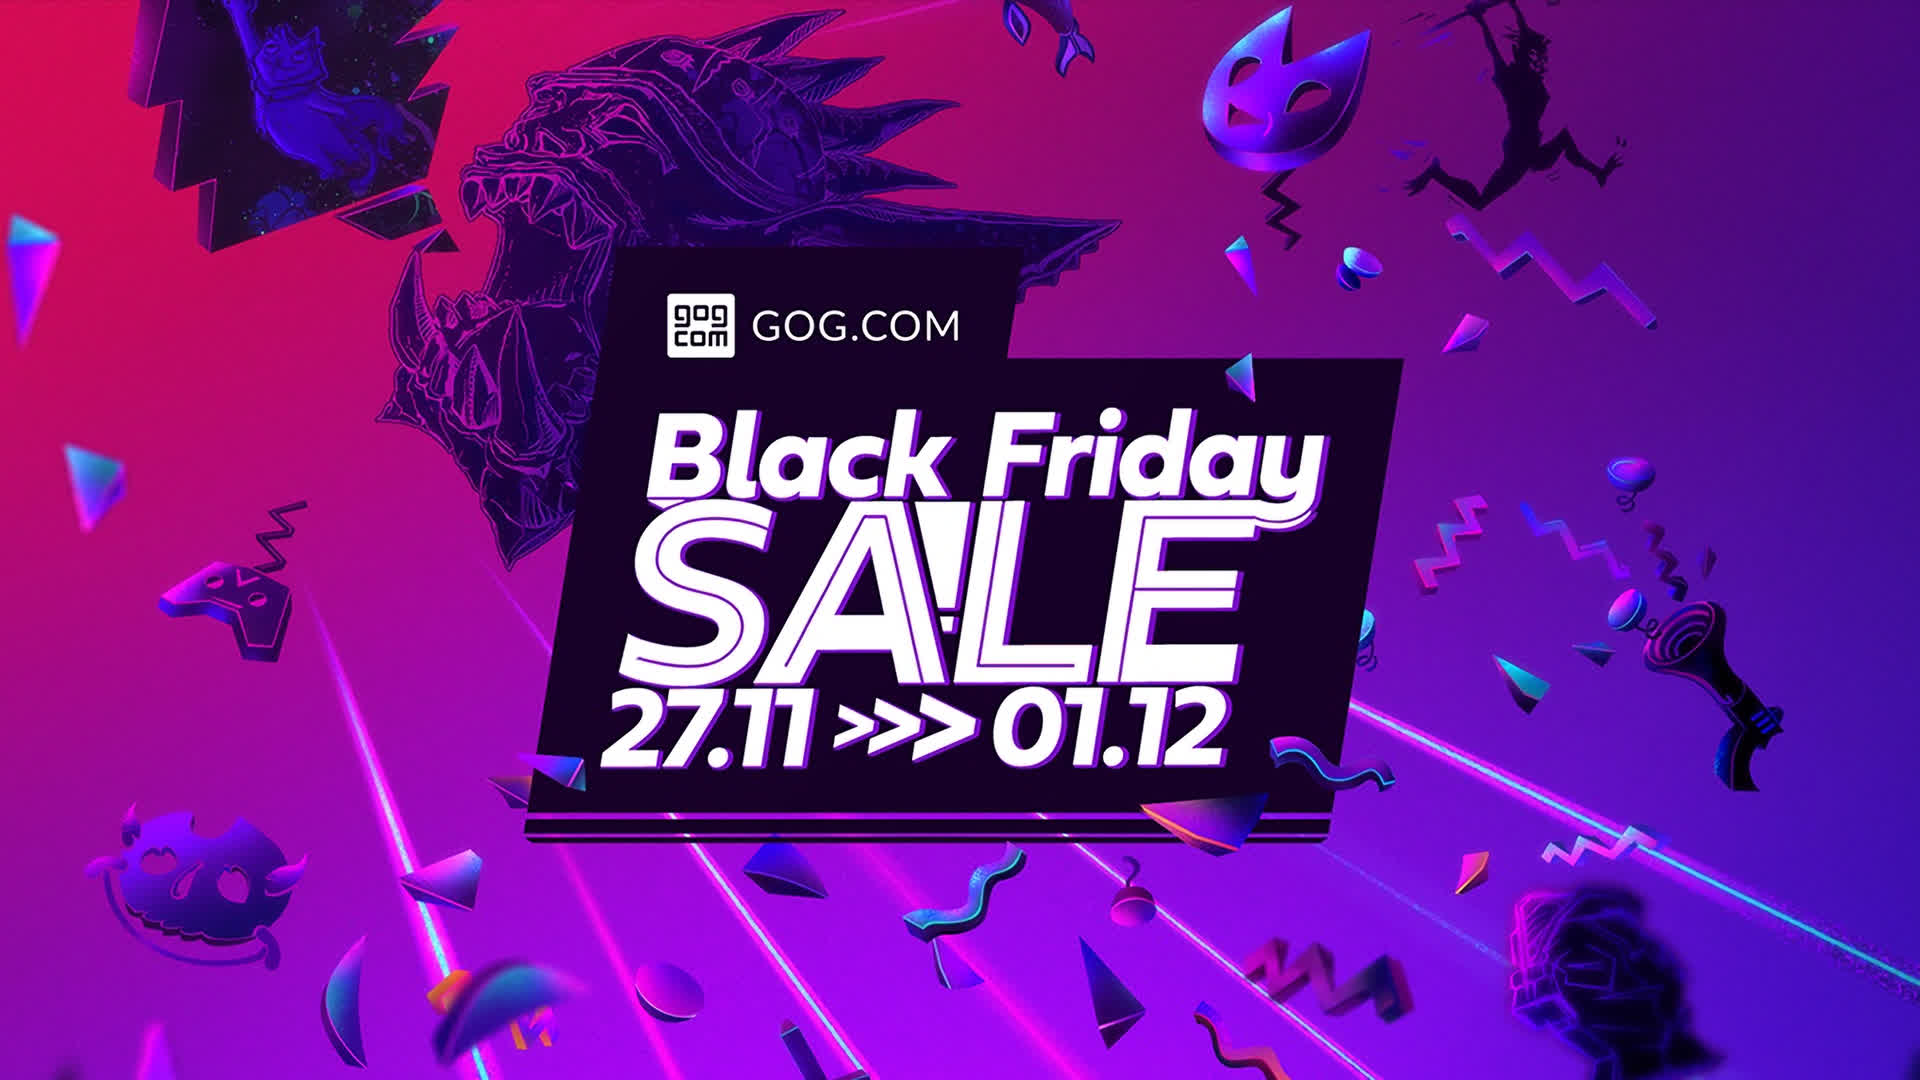 GOG.com's Black Friday sale is live through December 1